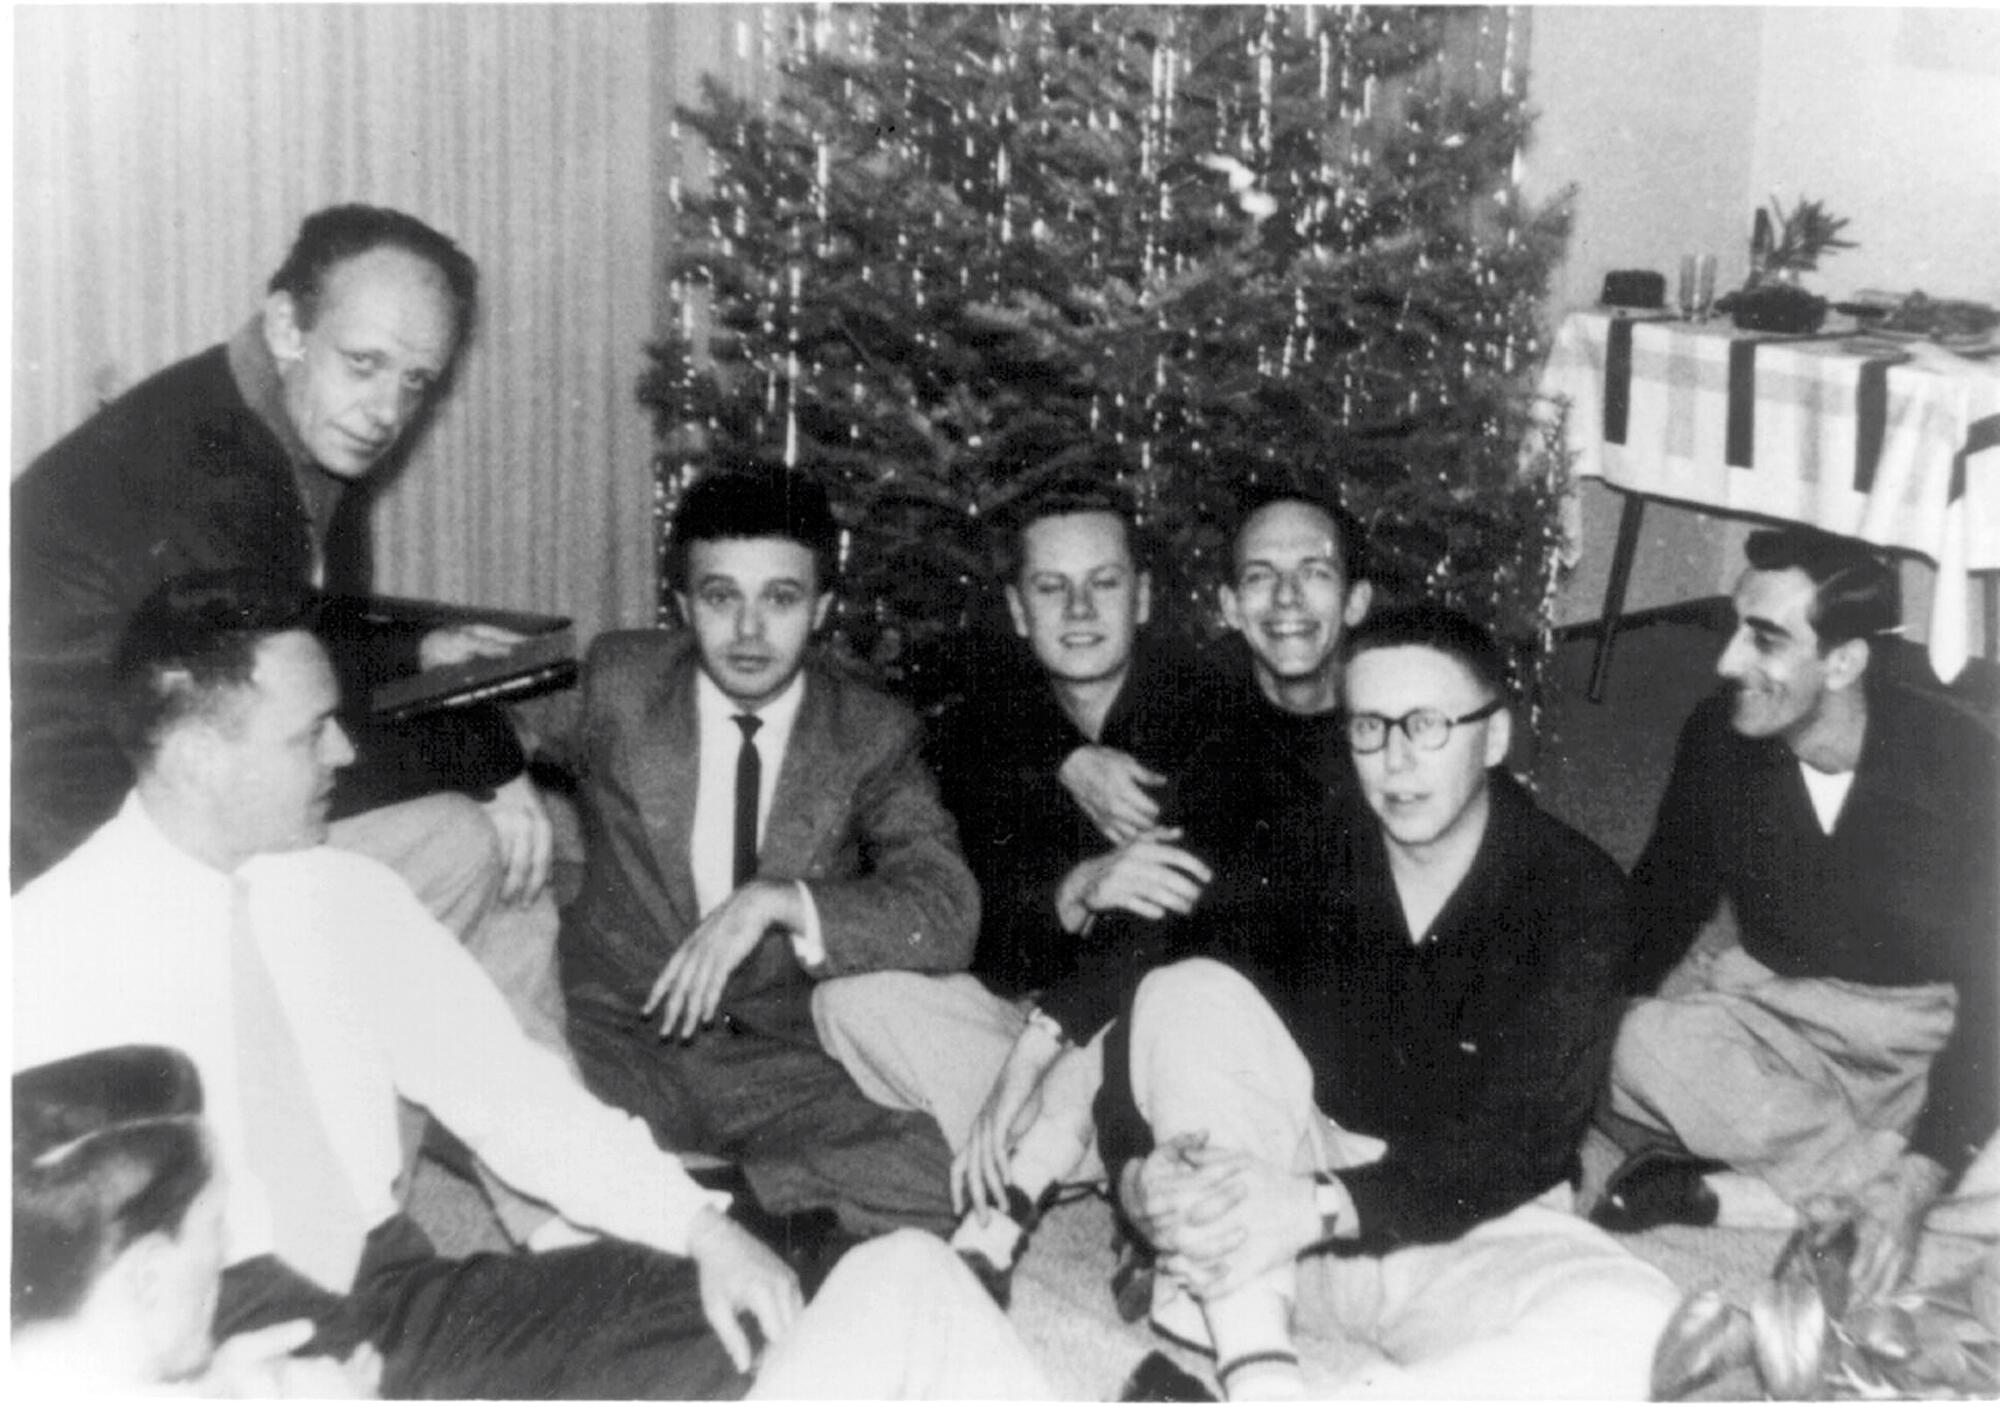 Circa 1951 photo of Mattachine Society members at Christmas.